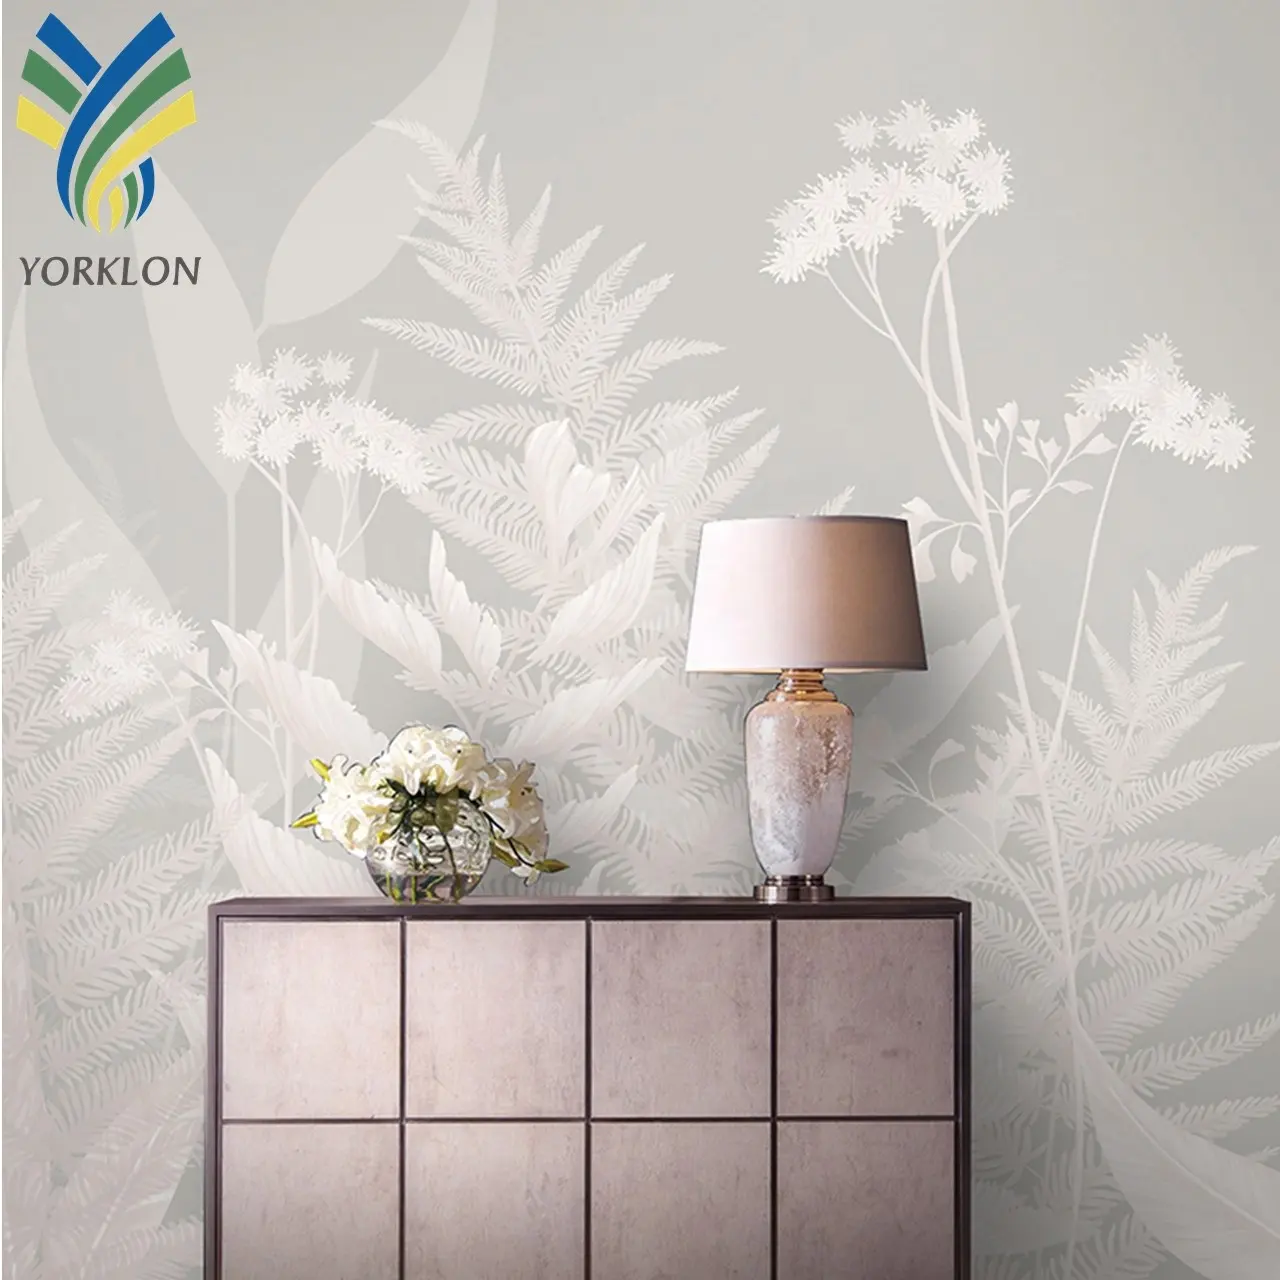 YKMP 0026 Nordic Floral Wall Paper Rolls 3D Modern Mural Leaves Silver Bedroom Wallpaper For Living Room